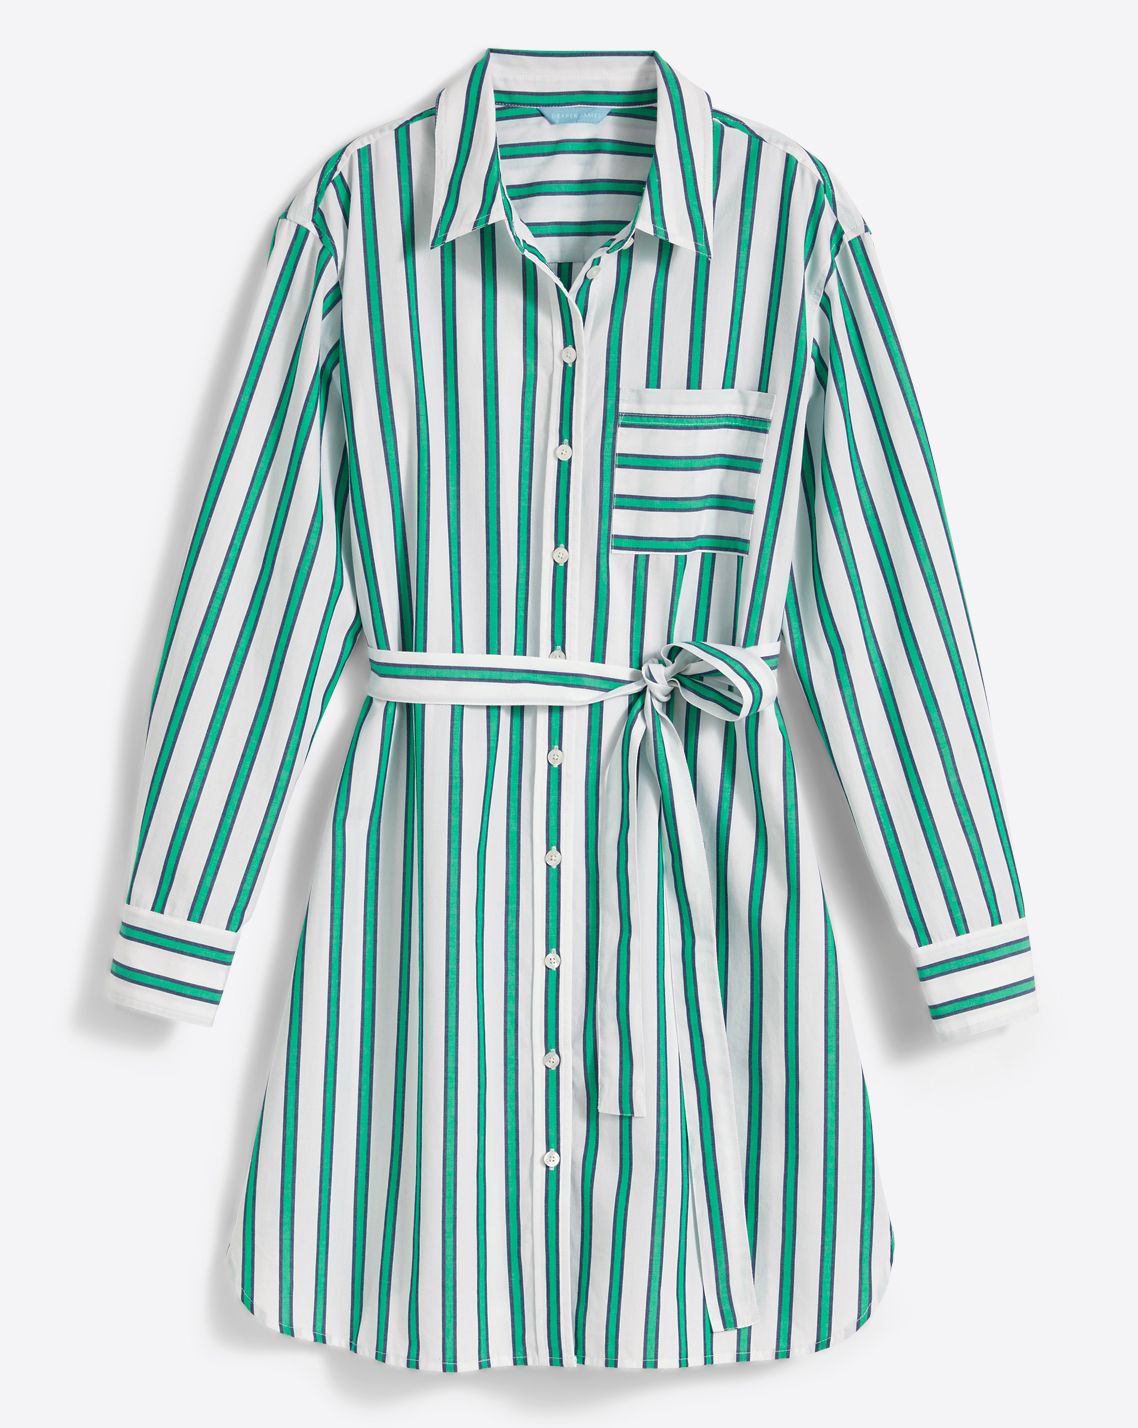 Carly Shirtdress in Bold Green Stripe